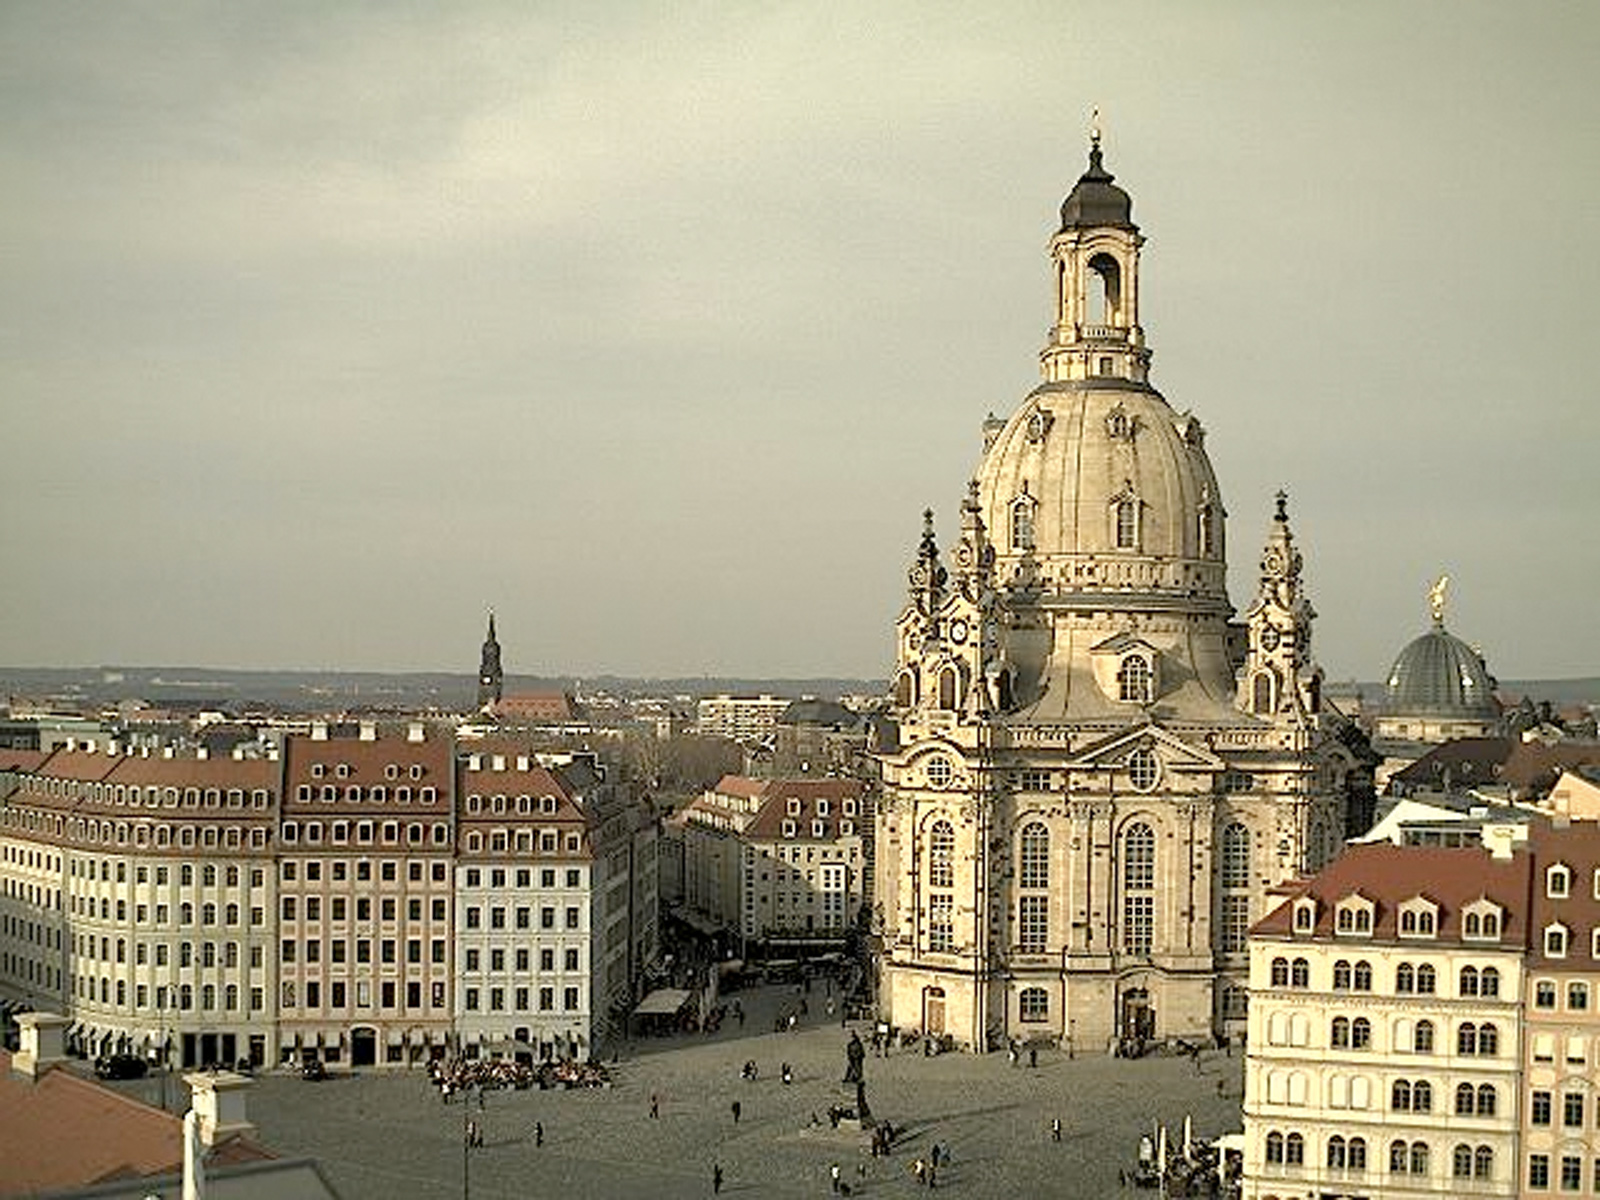 Frauenkirche, Dresden, Germany, 2010